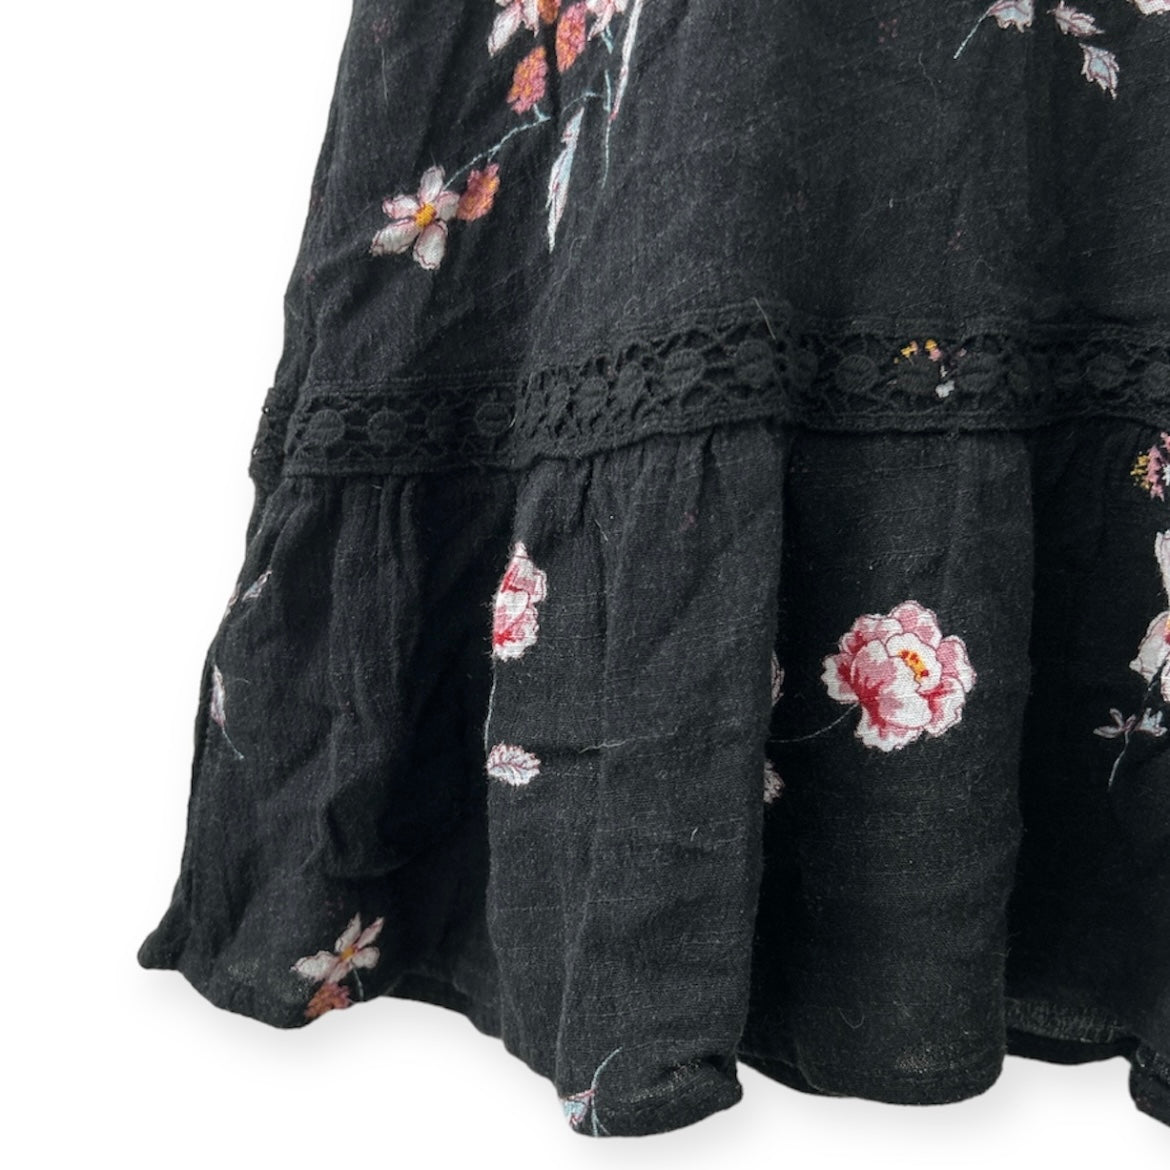 Black Floral Fit & Flare Split Neckline Short Sleeve Size M Women's Dress